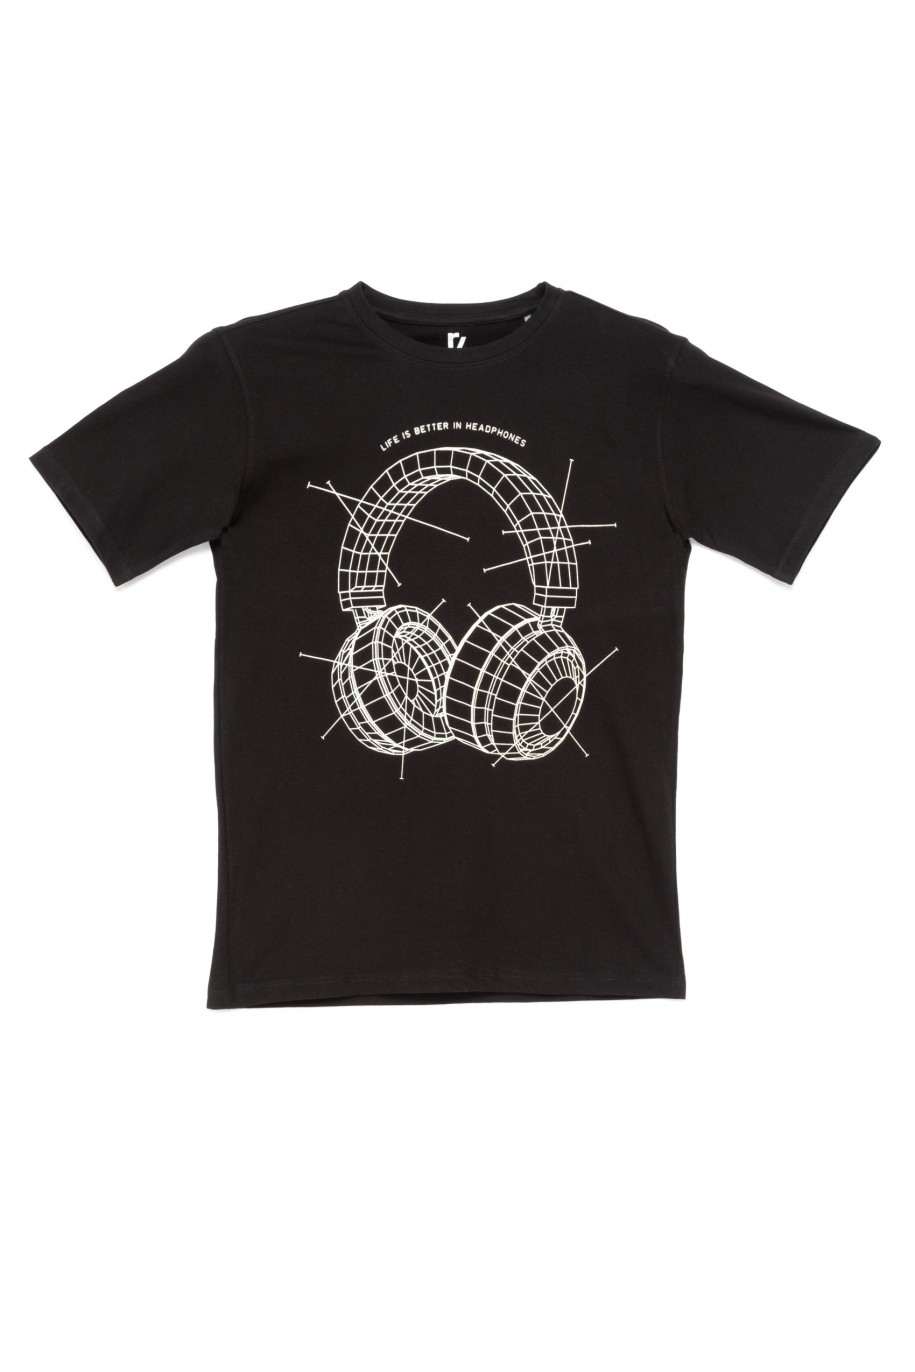 Czarny t-shirt dla chłopaka HEADPHONES - 31121